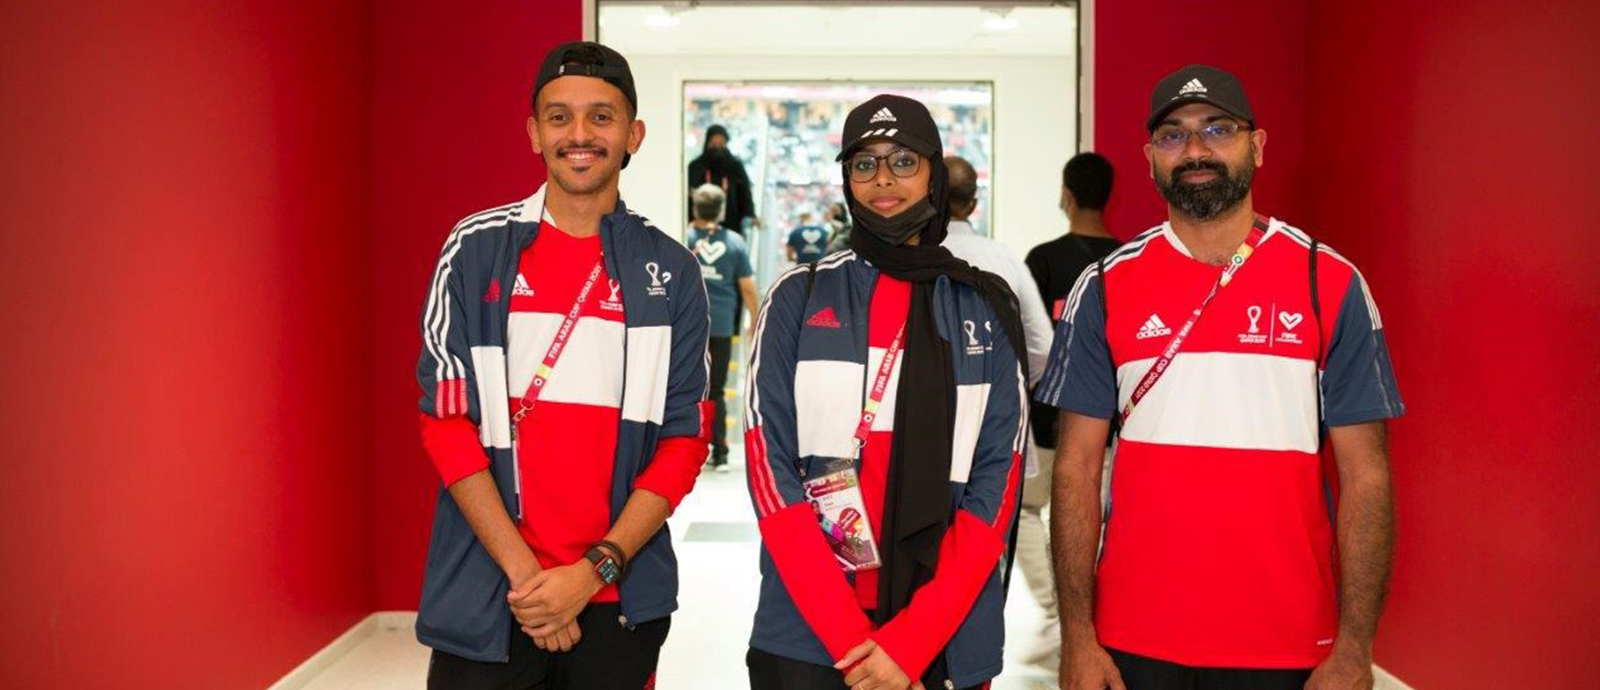 متطوعي مونديال قطر 2022